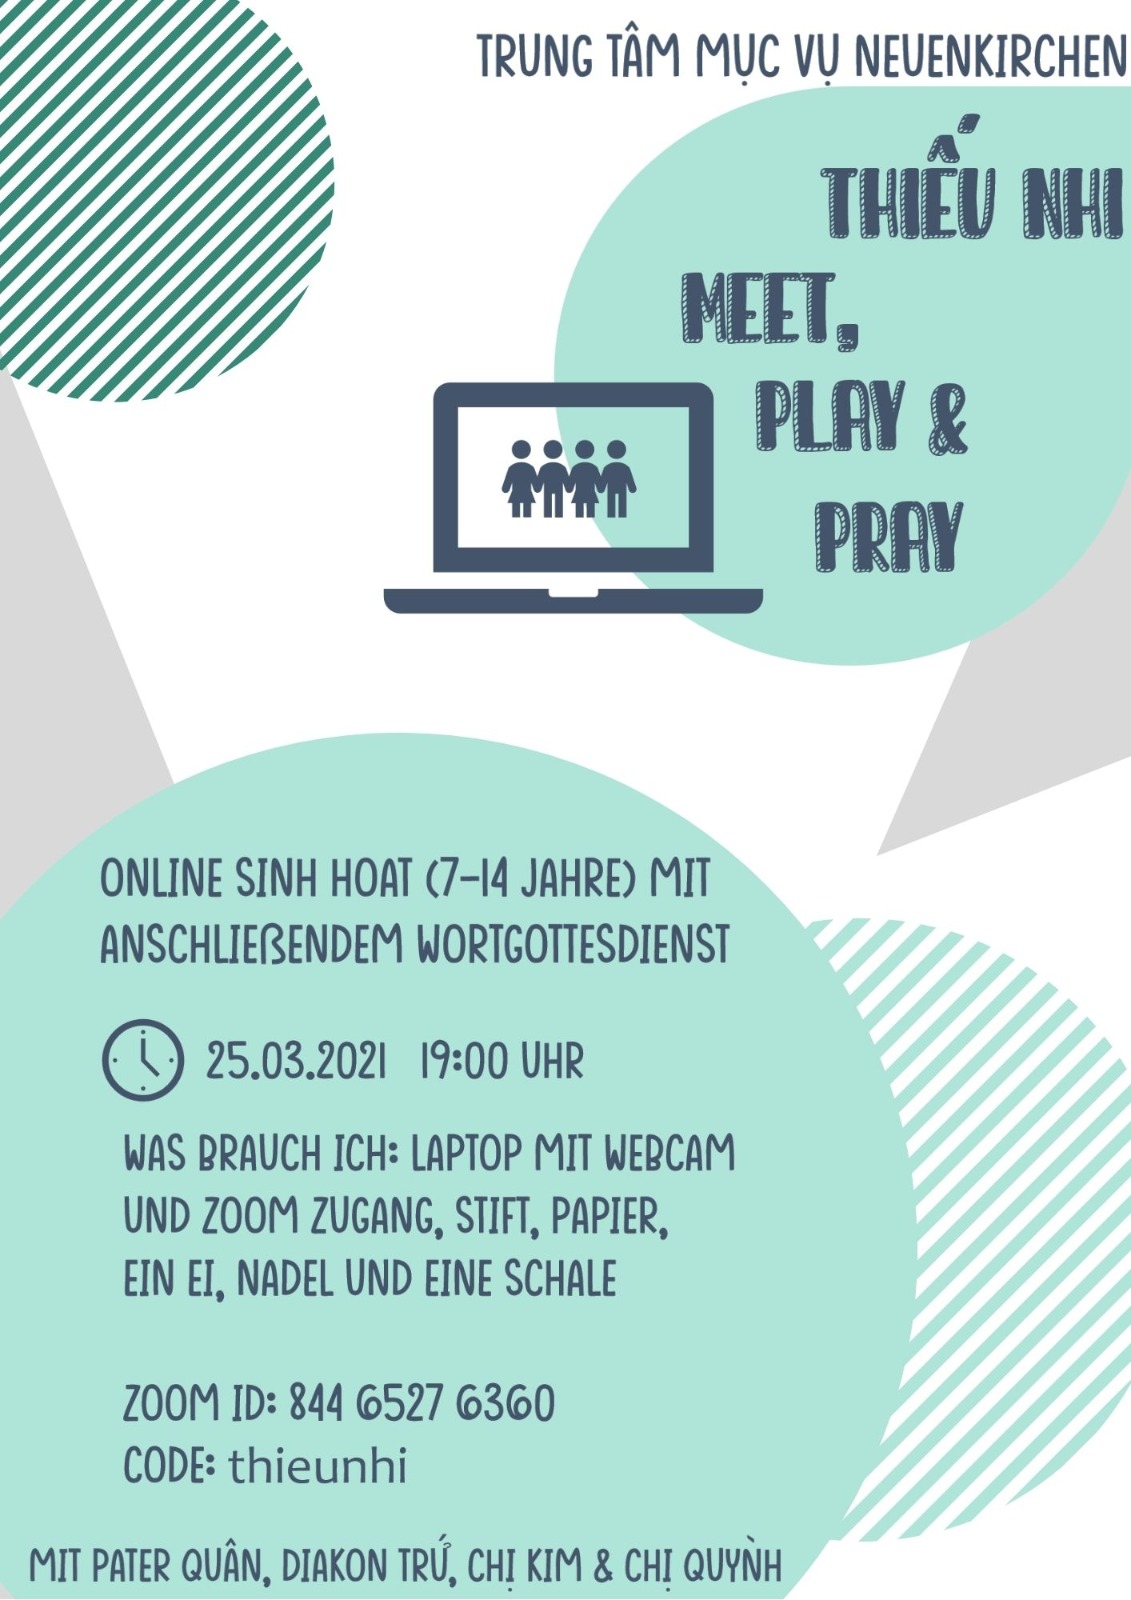 Meet Play Pray